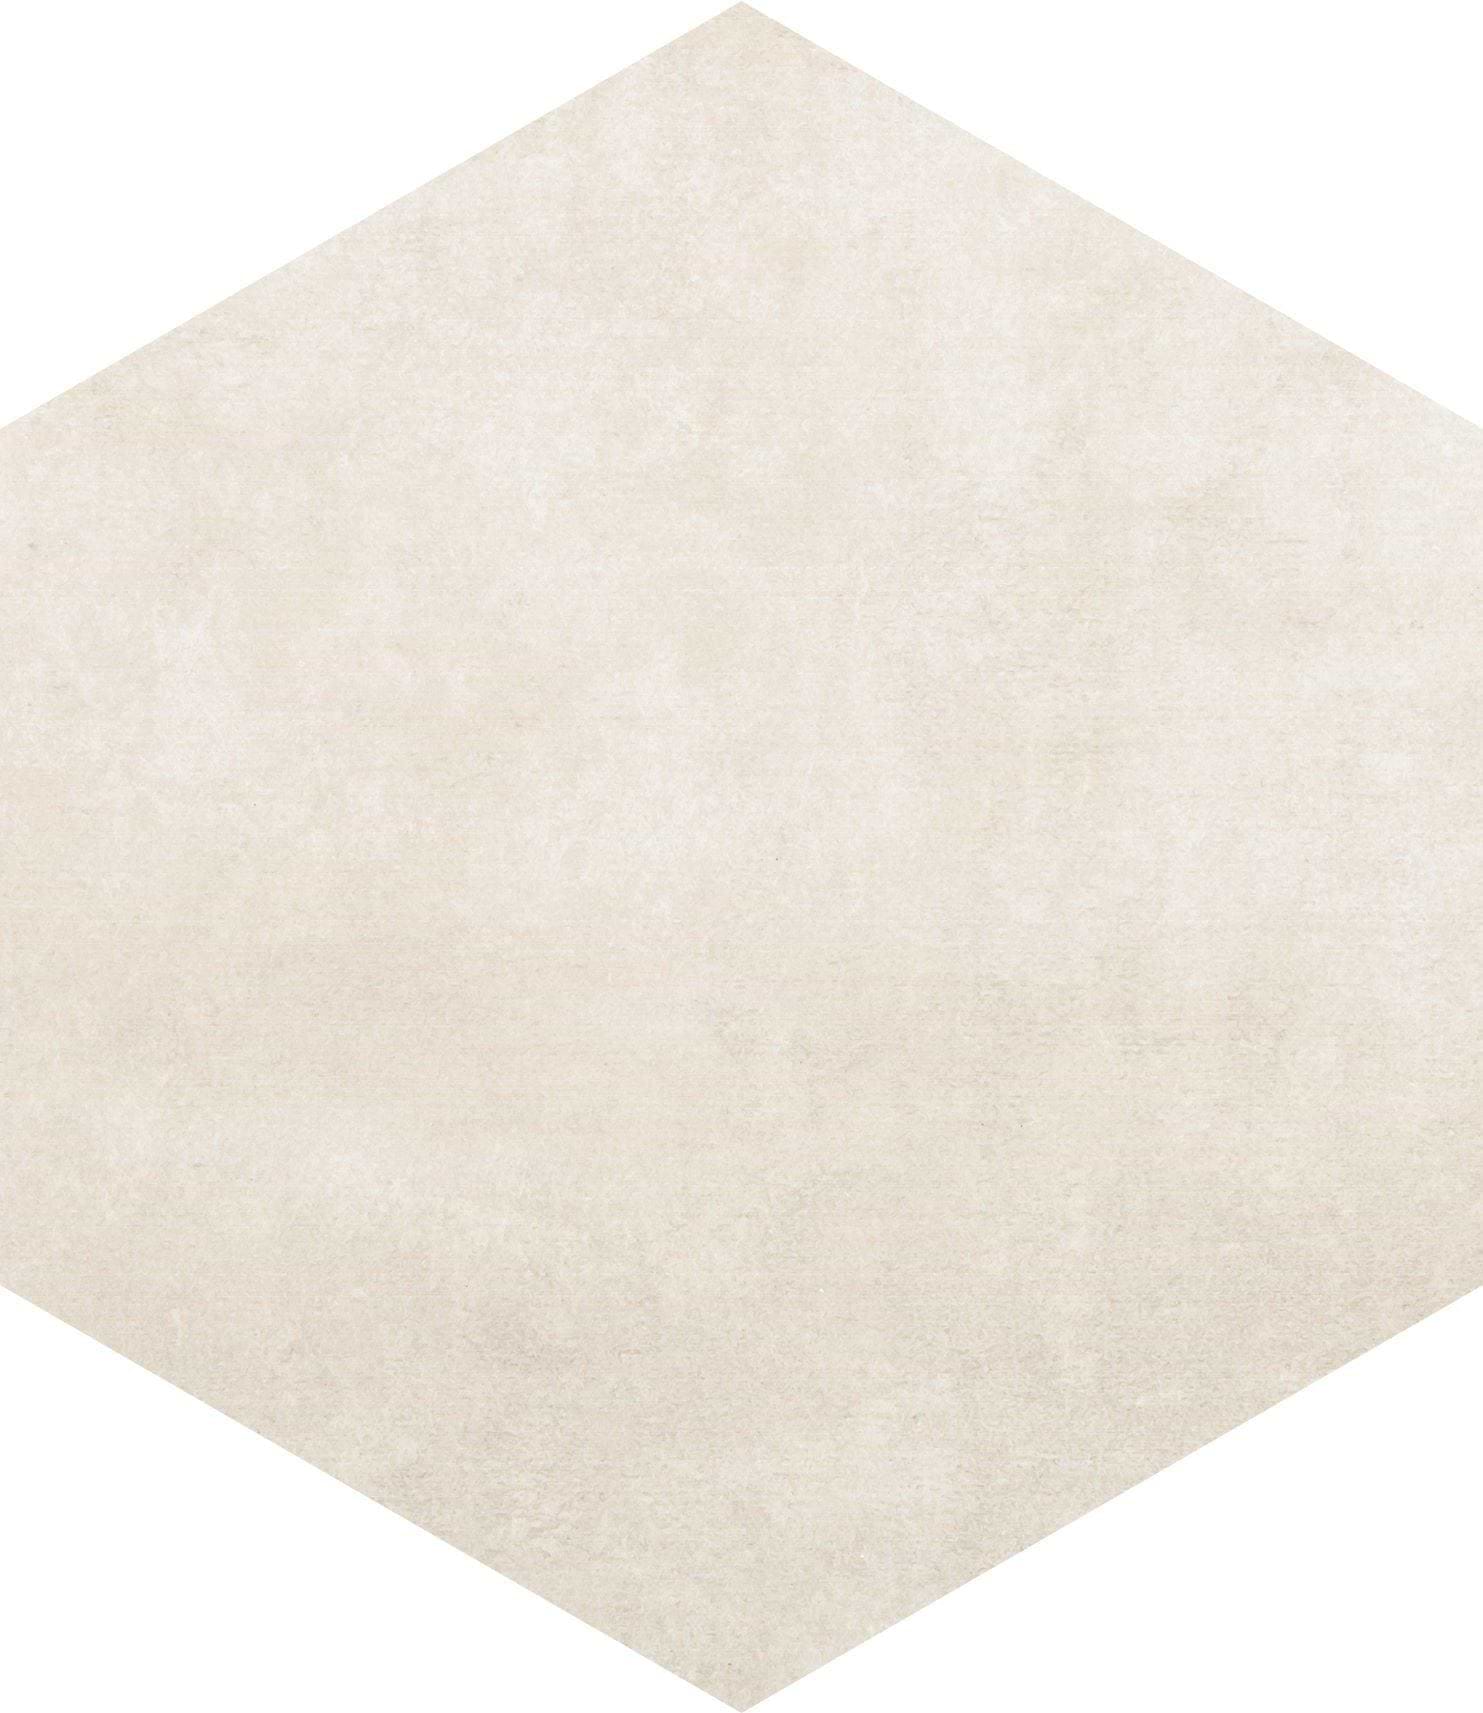 Ca' Pietra Wall & Floor Tiles Hexagon 25.8 x 29 x 1cm Loft Porcelain Hexagon Sand